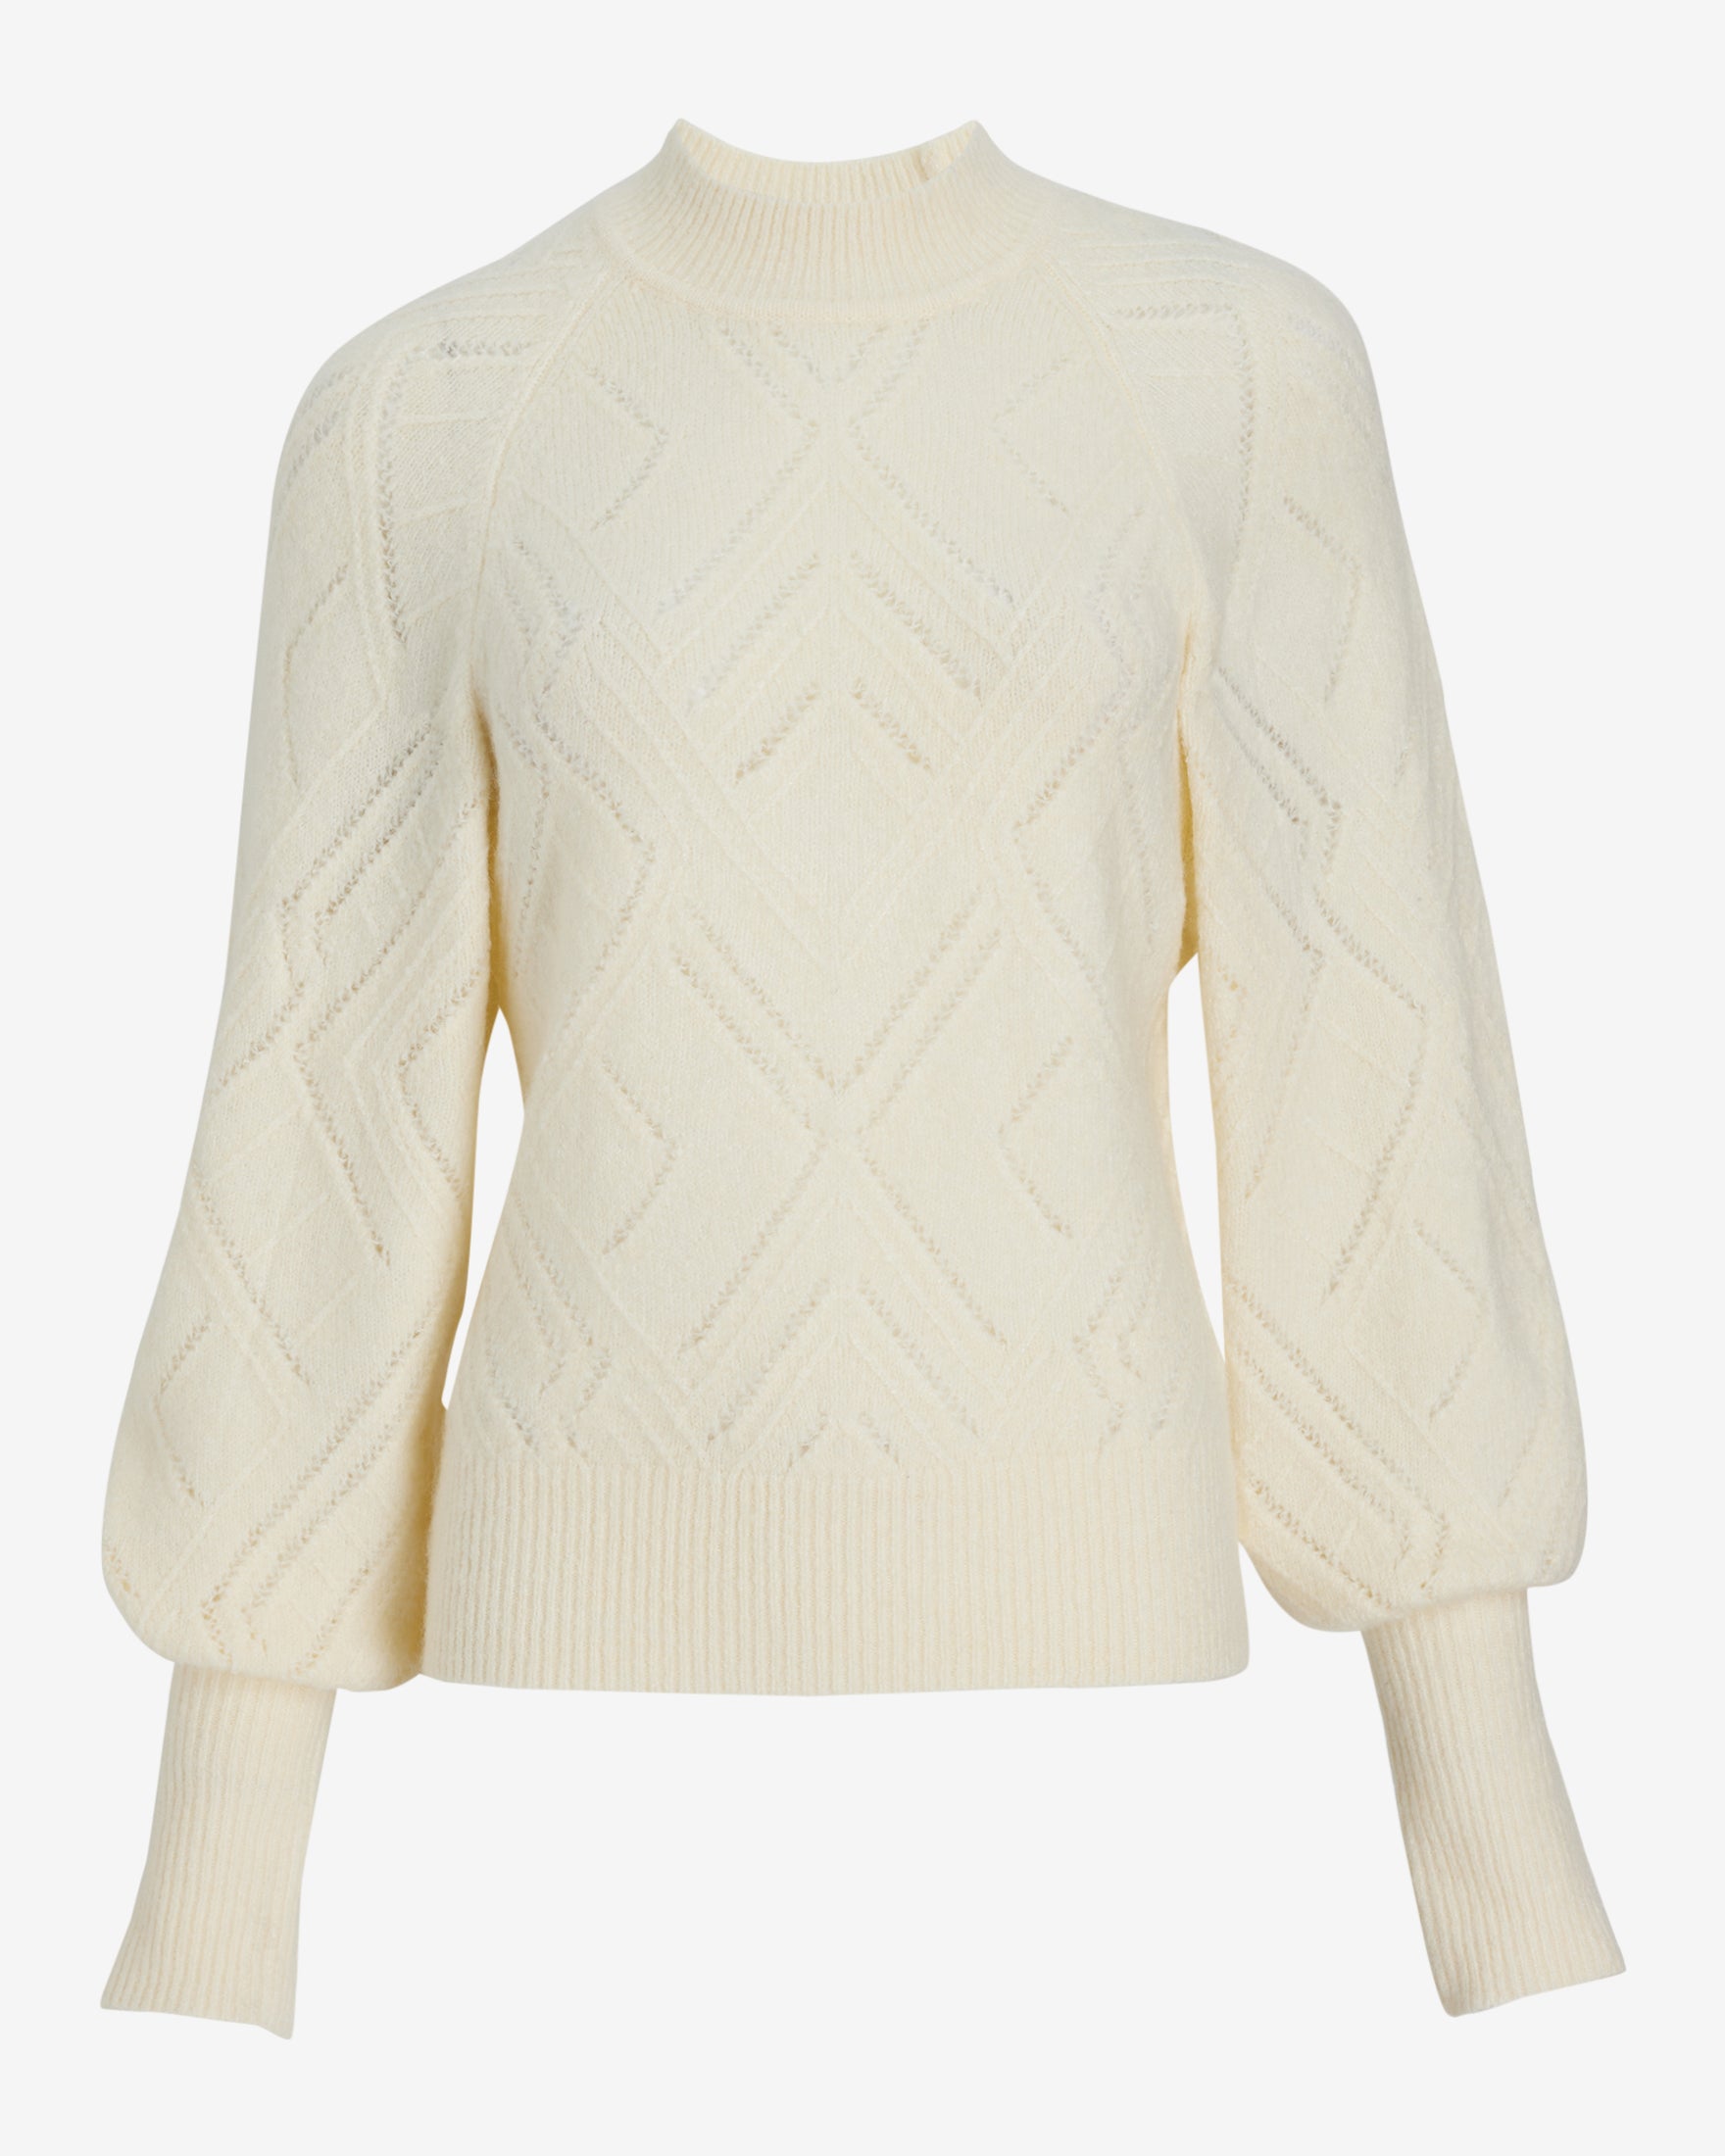 Cream-colored turtleneck sweater